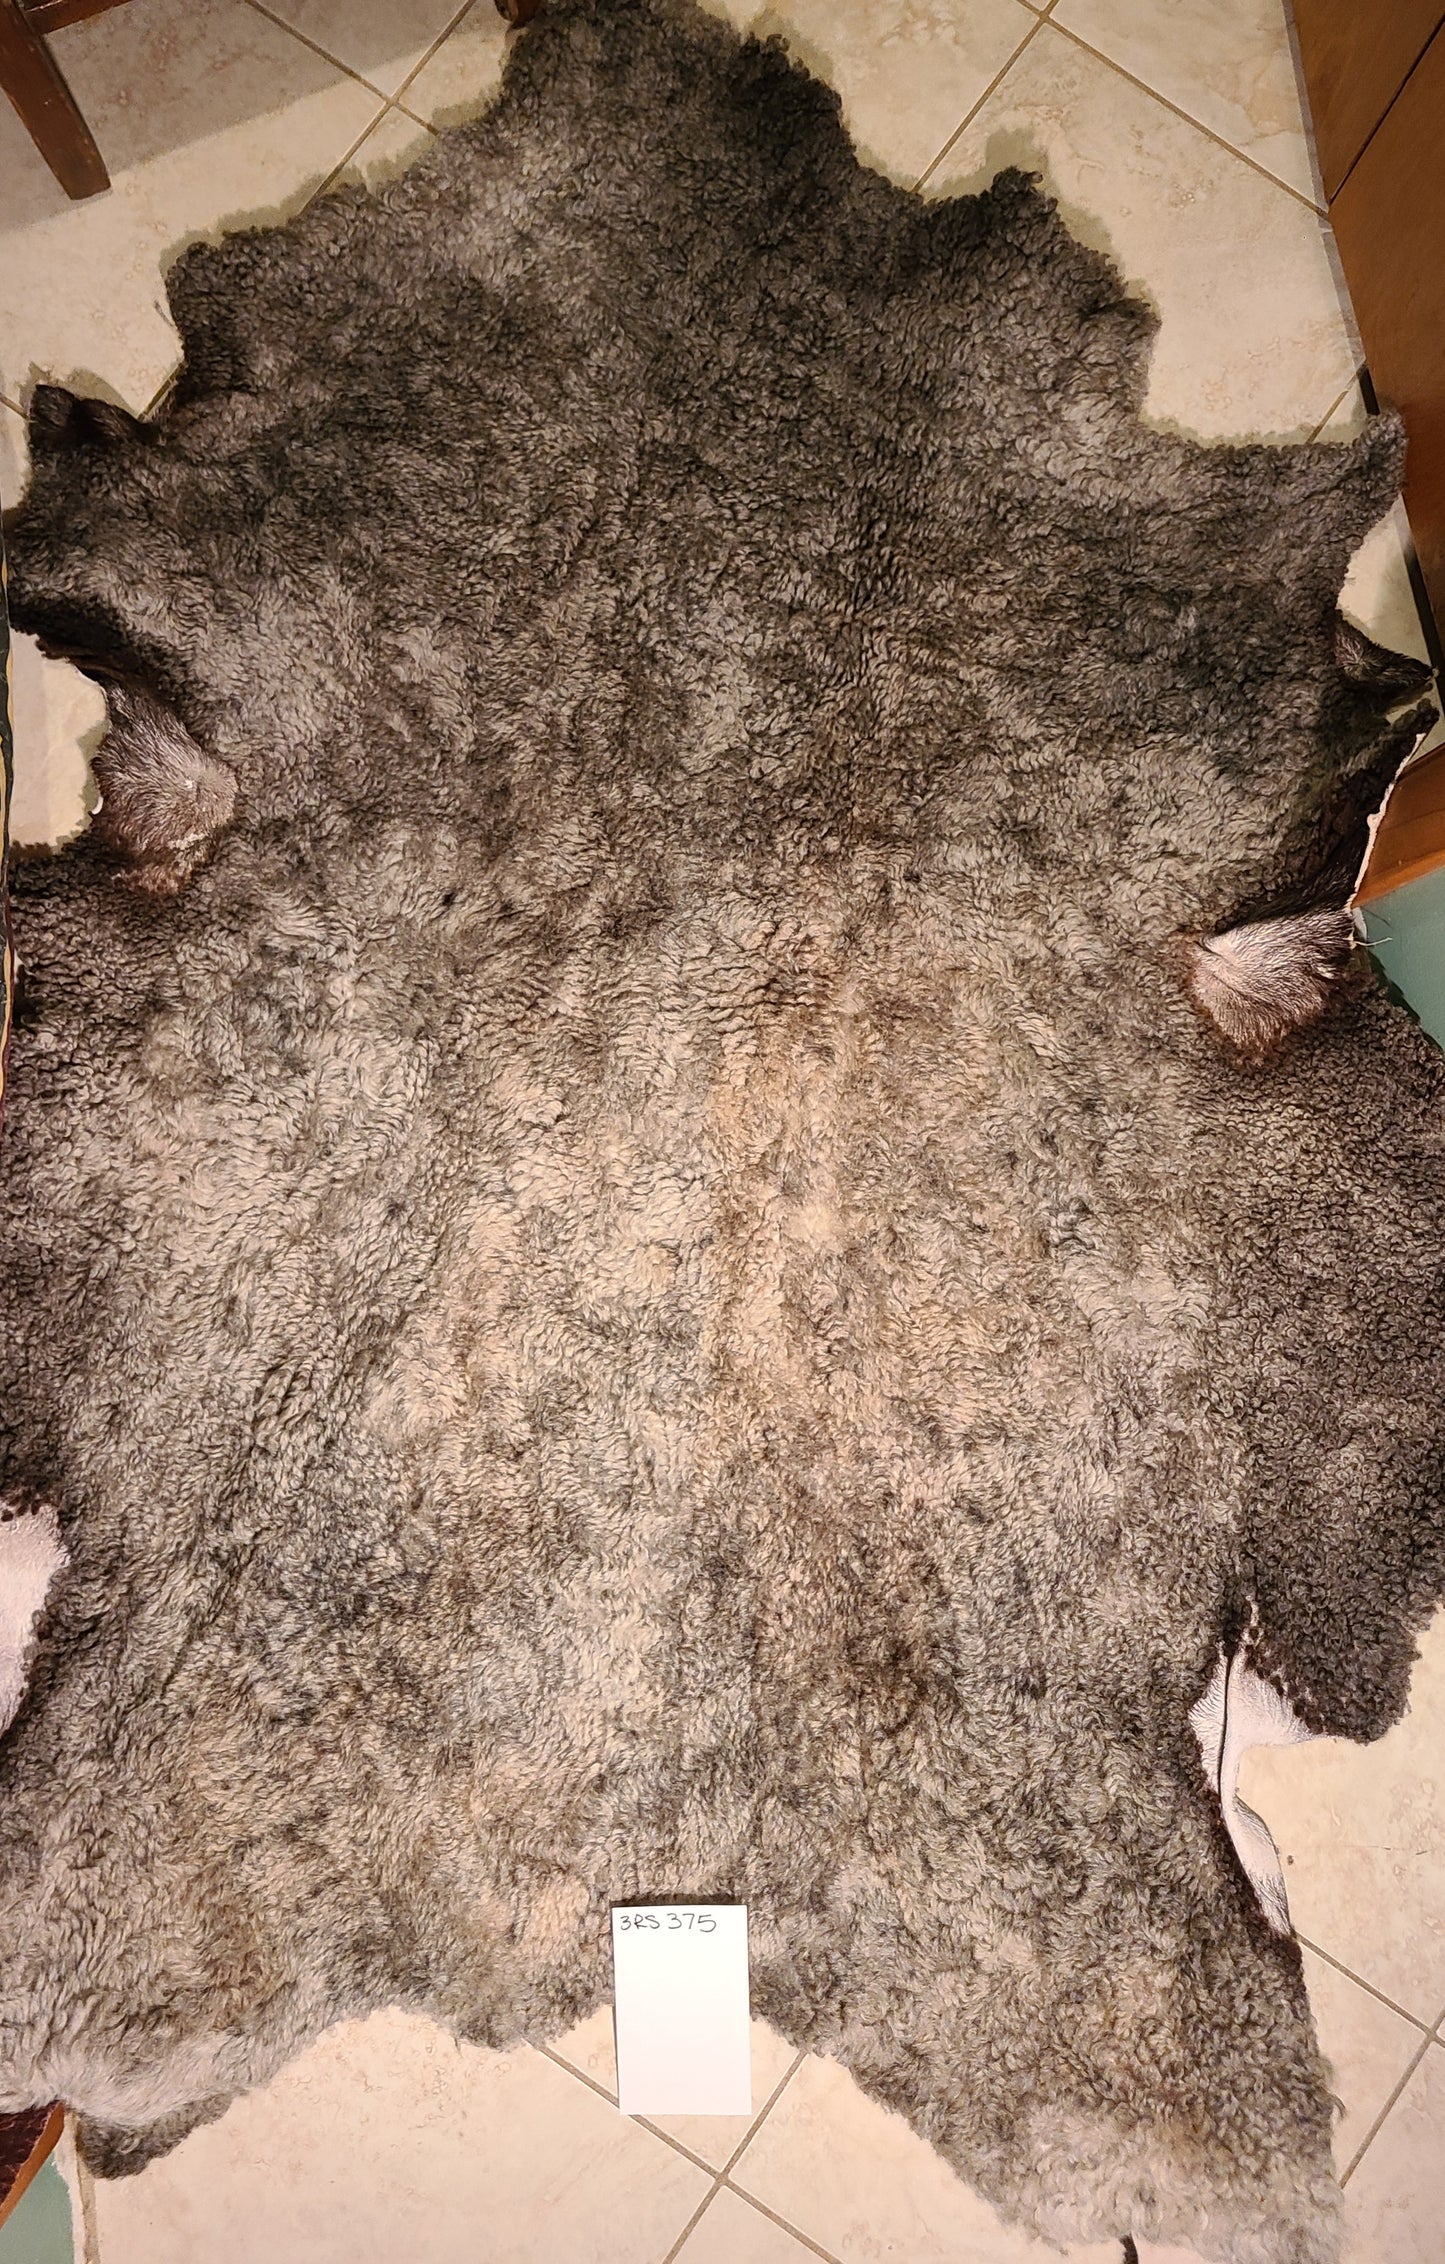 Sheepskin Big Natural Color Silver- Gray Pelt 49 x 37 Inch 3RS375